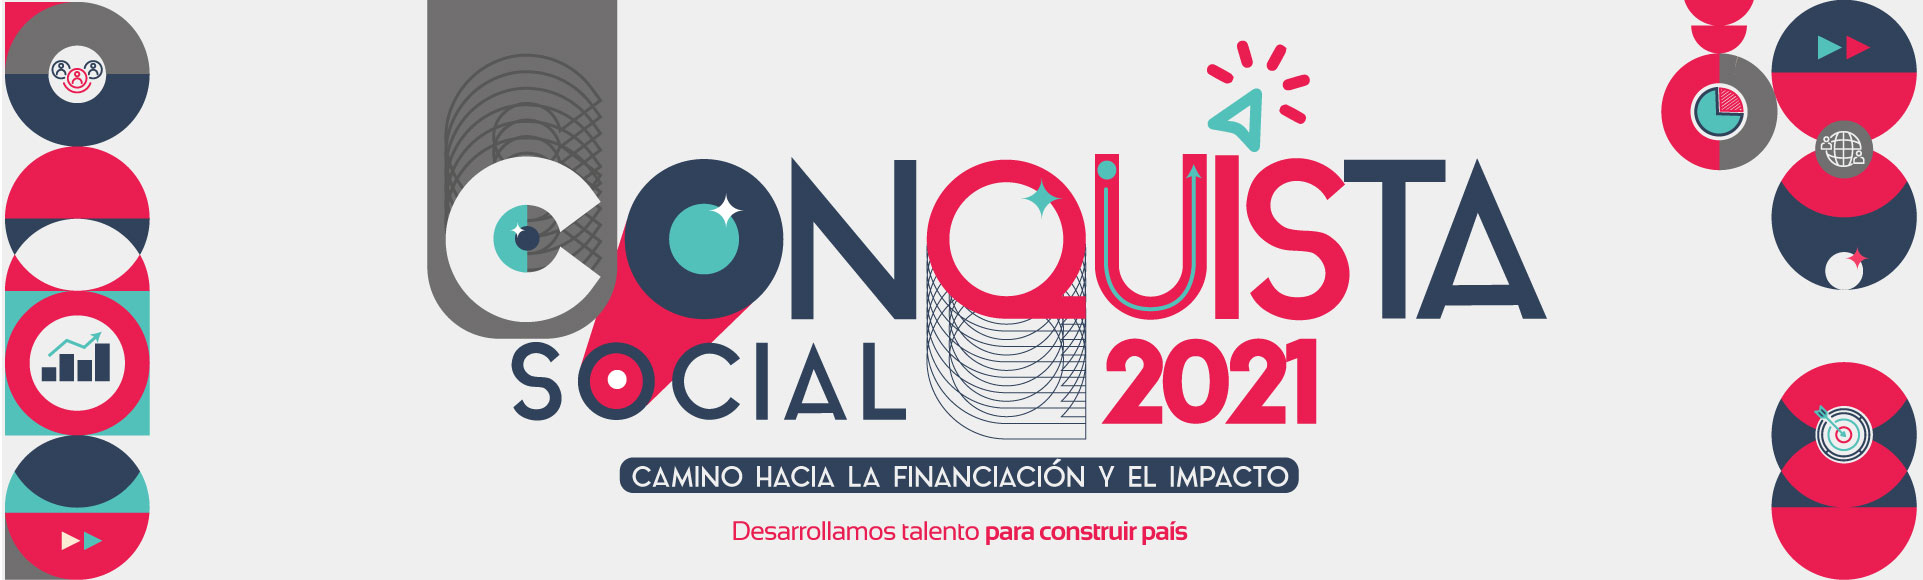 CONQUISTA SOCIAL 2021